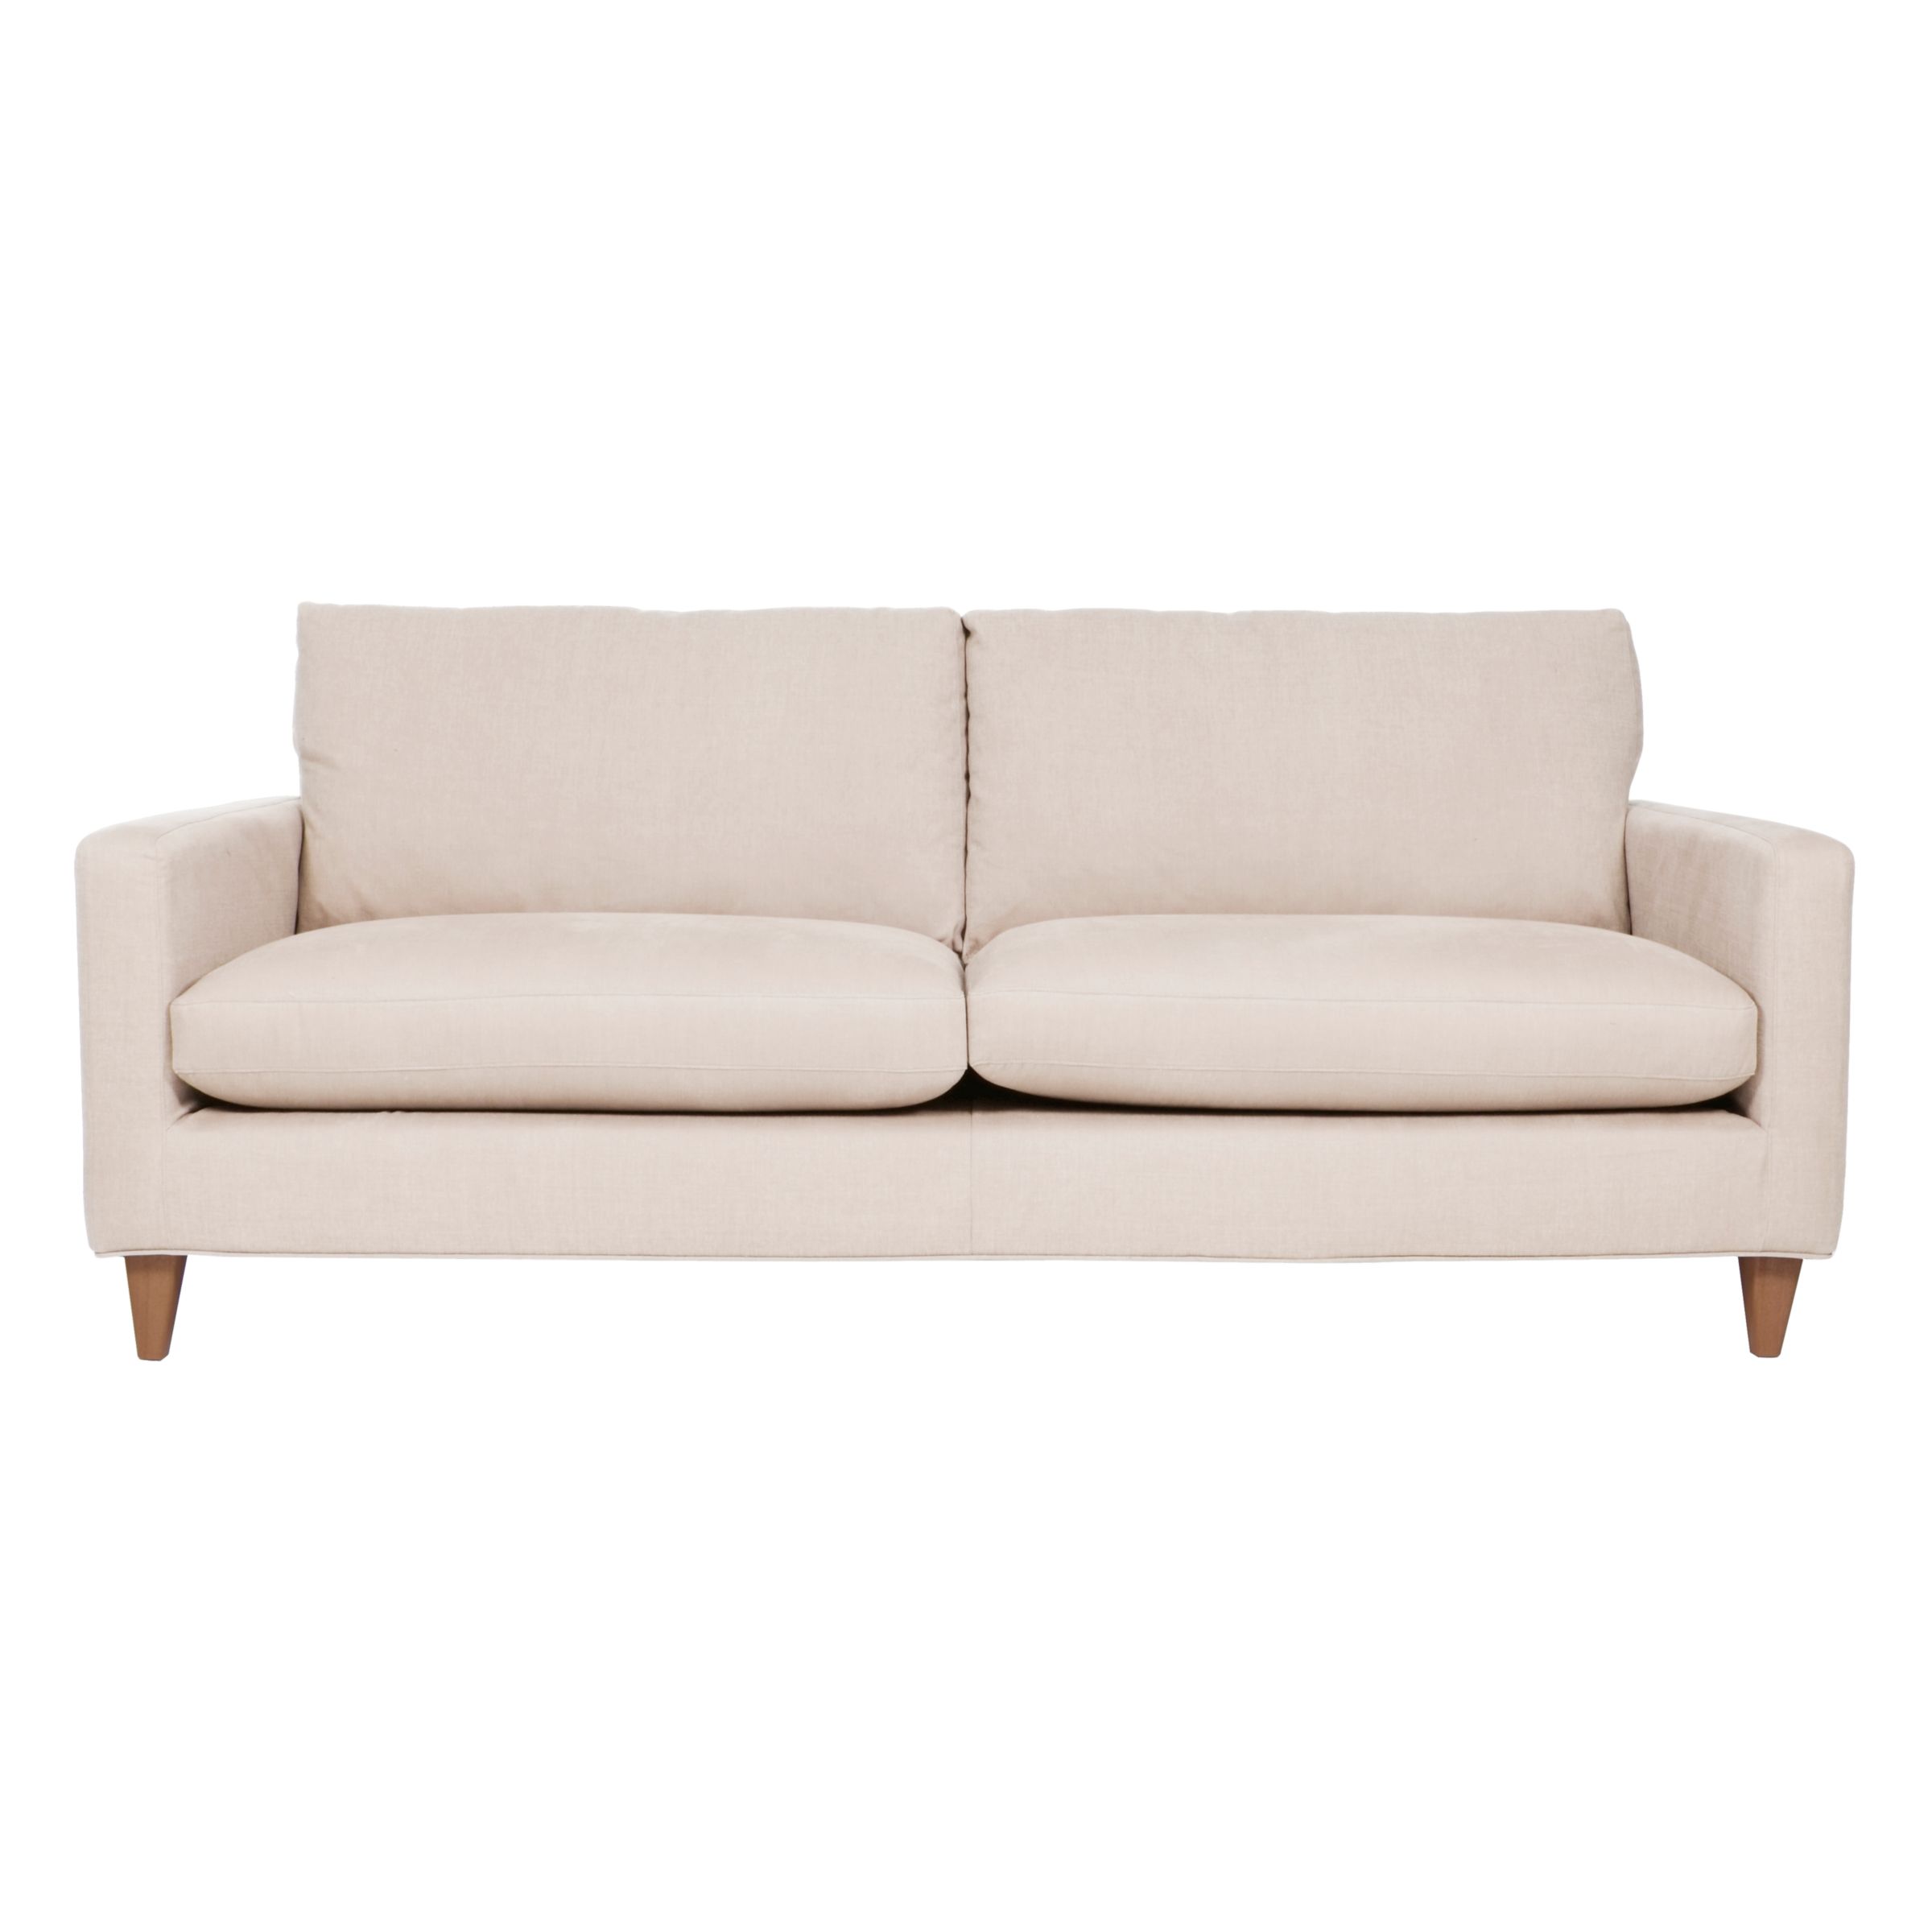 John Lewis Bailey Grand Sofa, Linen, width 214cm